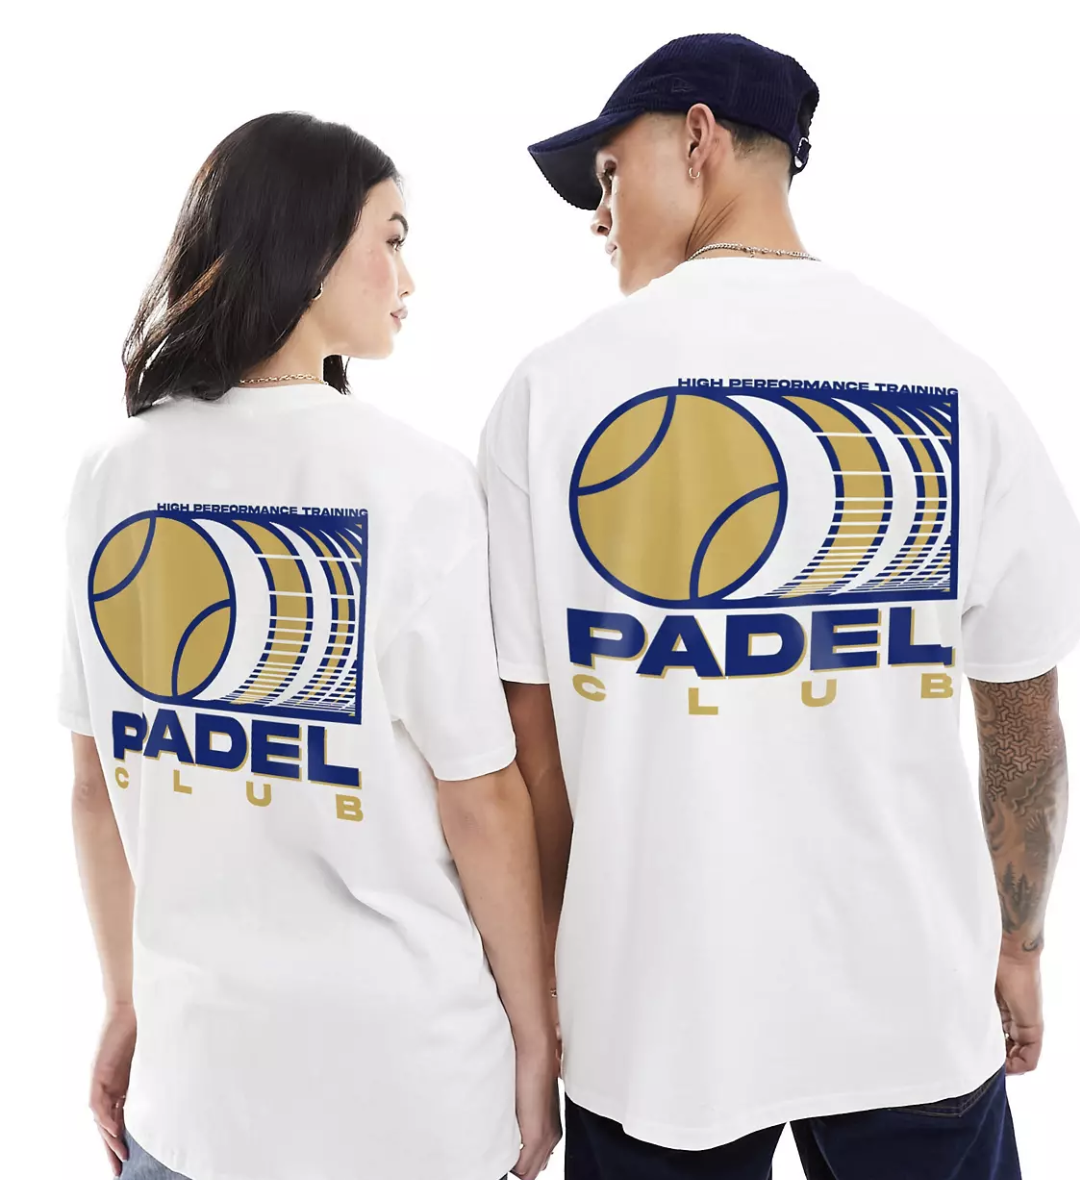 The ASOS t-shirt that Club de Padel has said copies their merch. Credit: ASOS